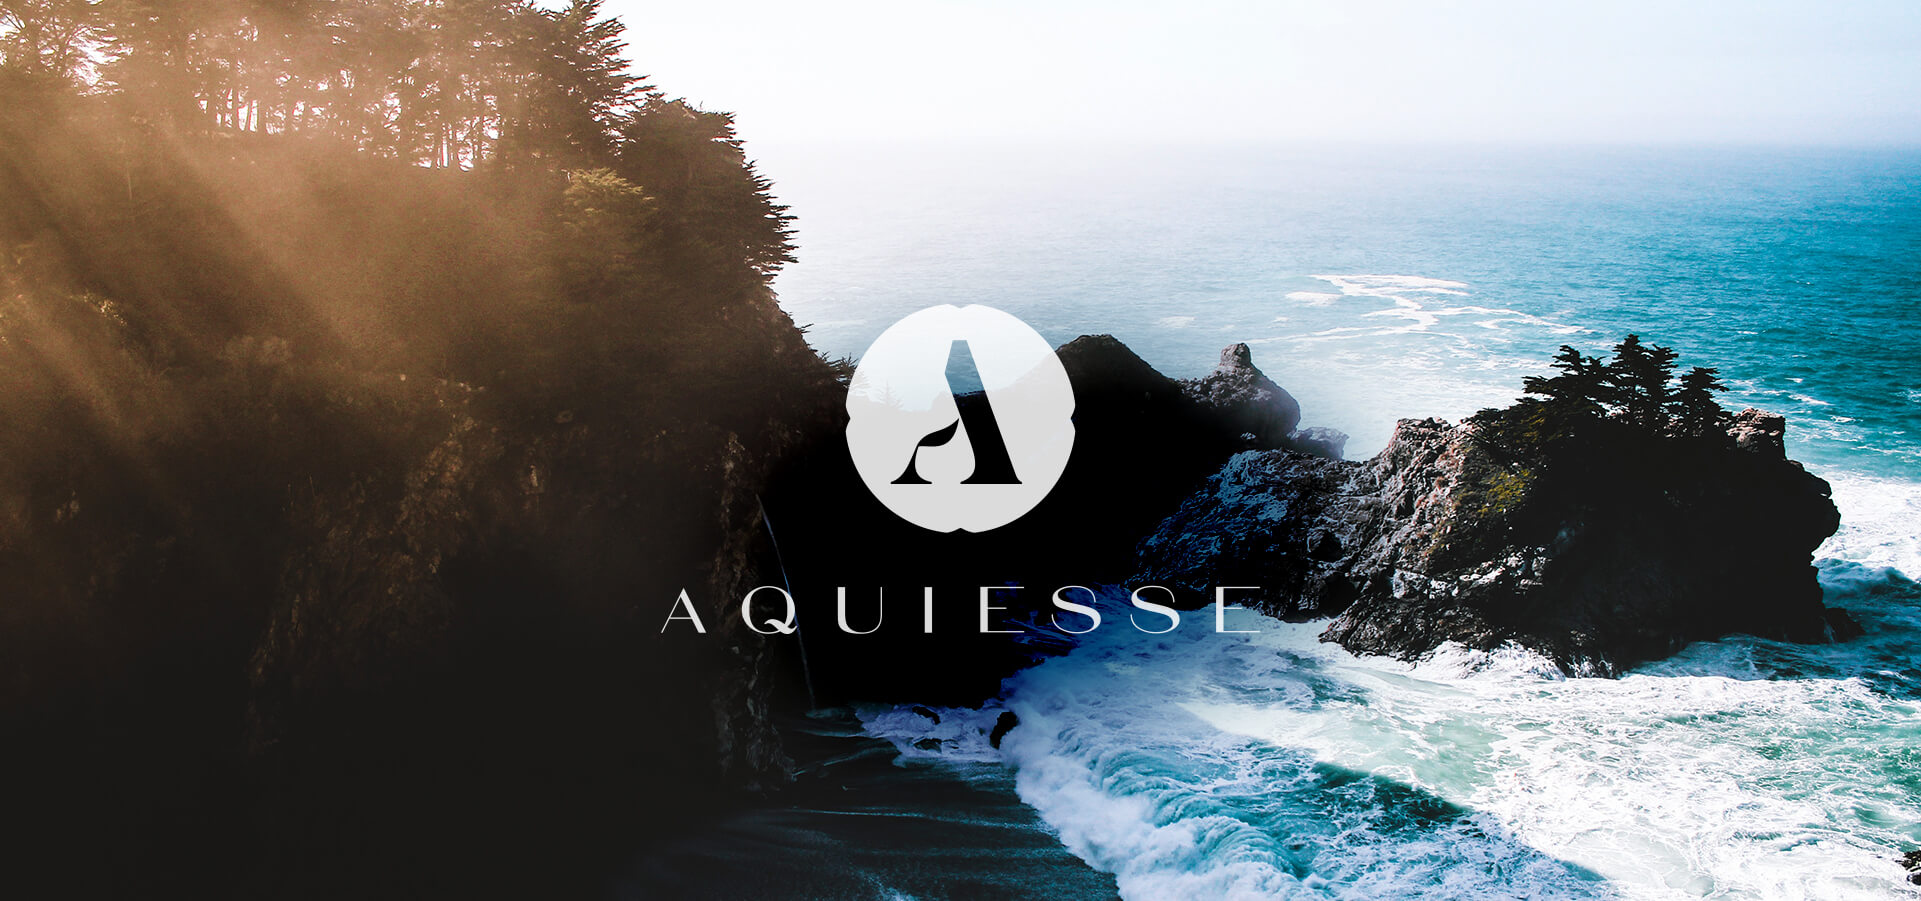 Aquiesse Logo and brand identity